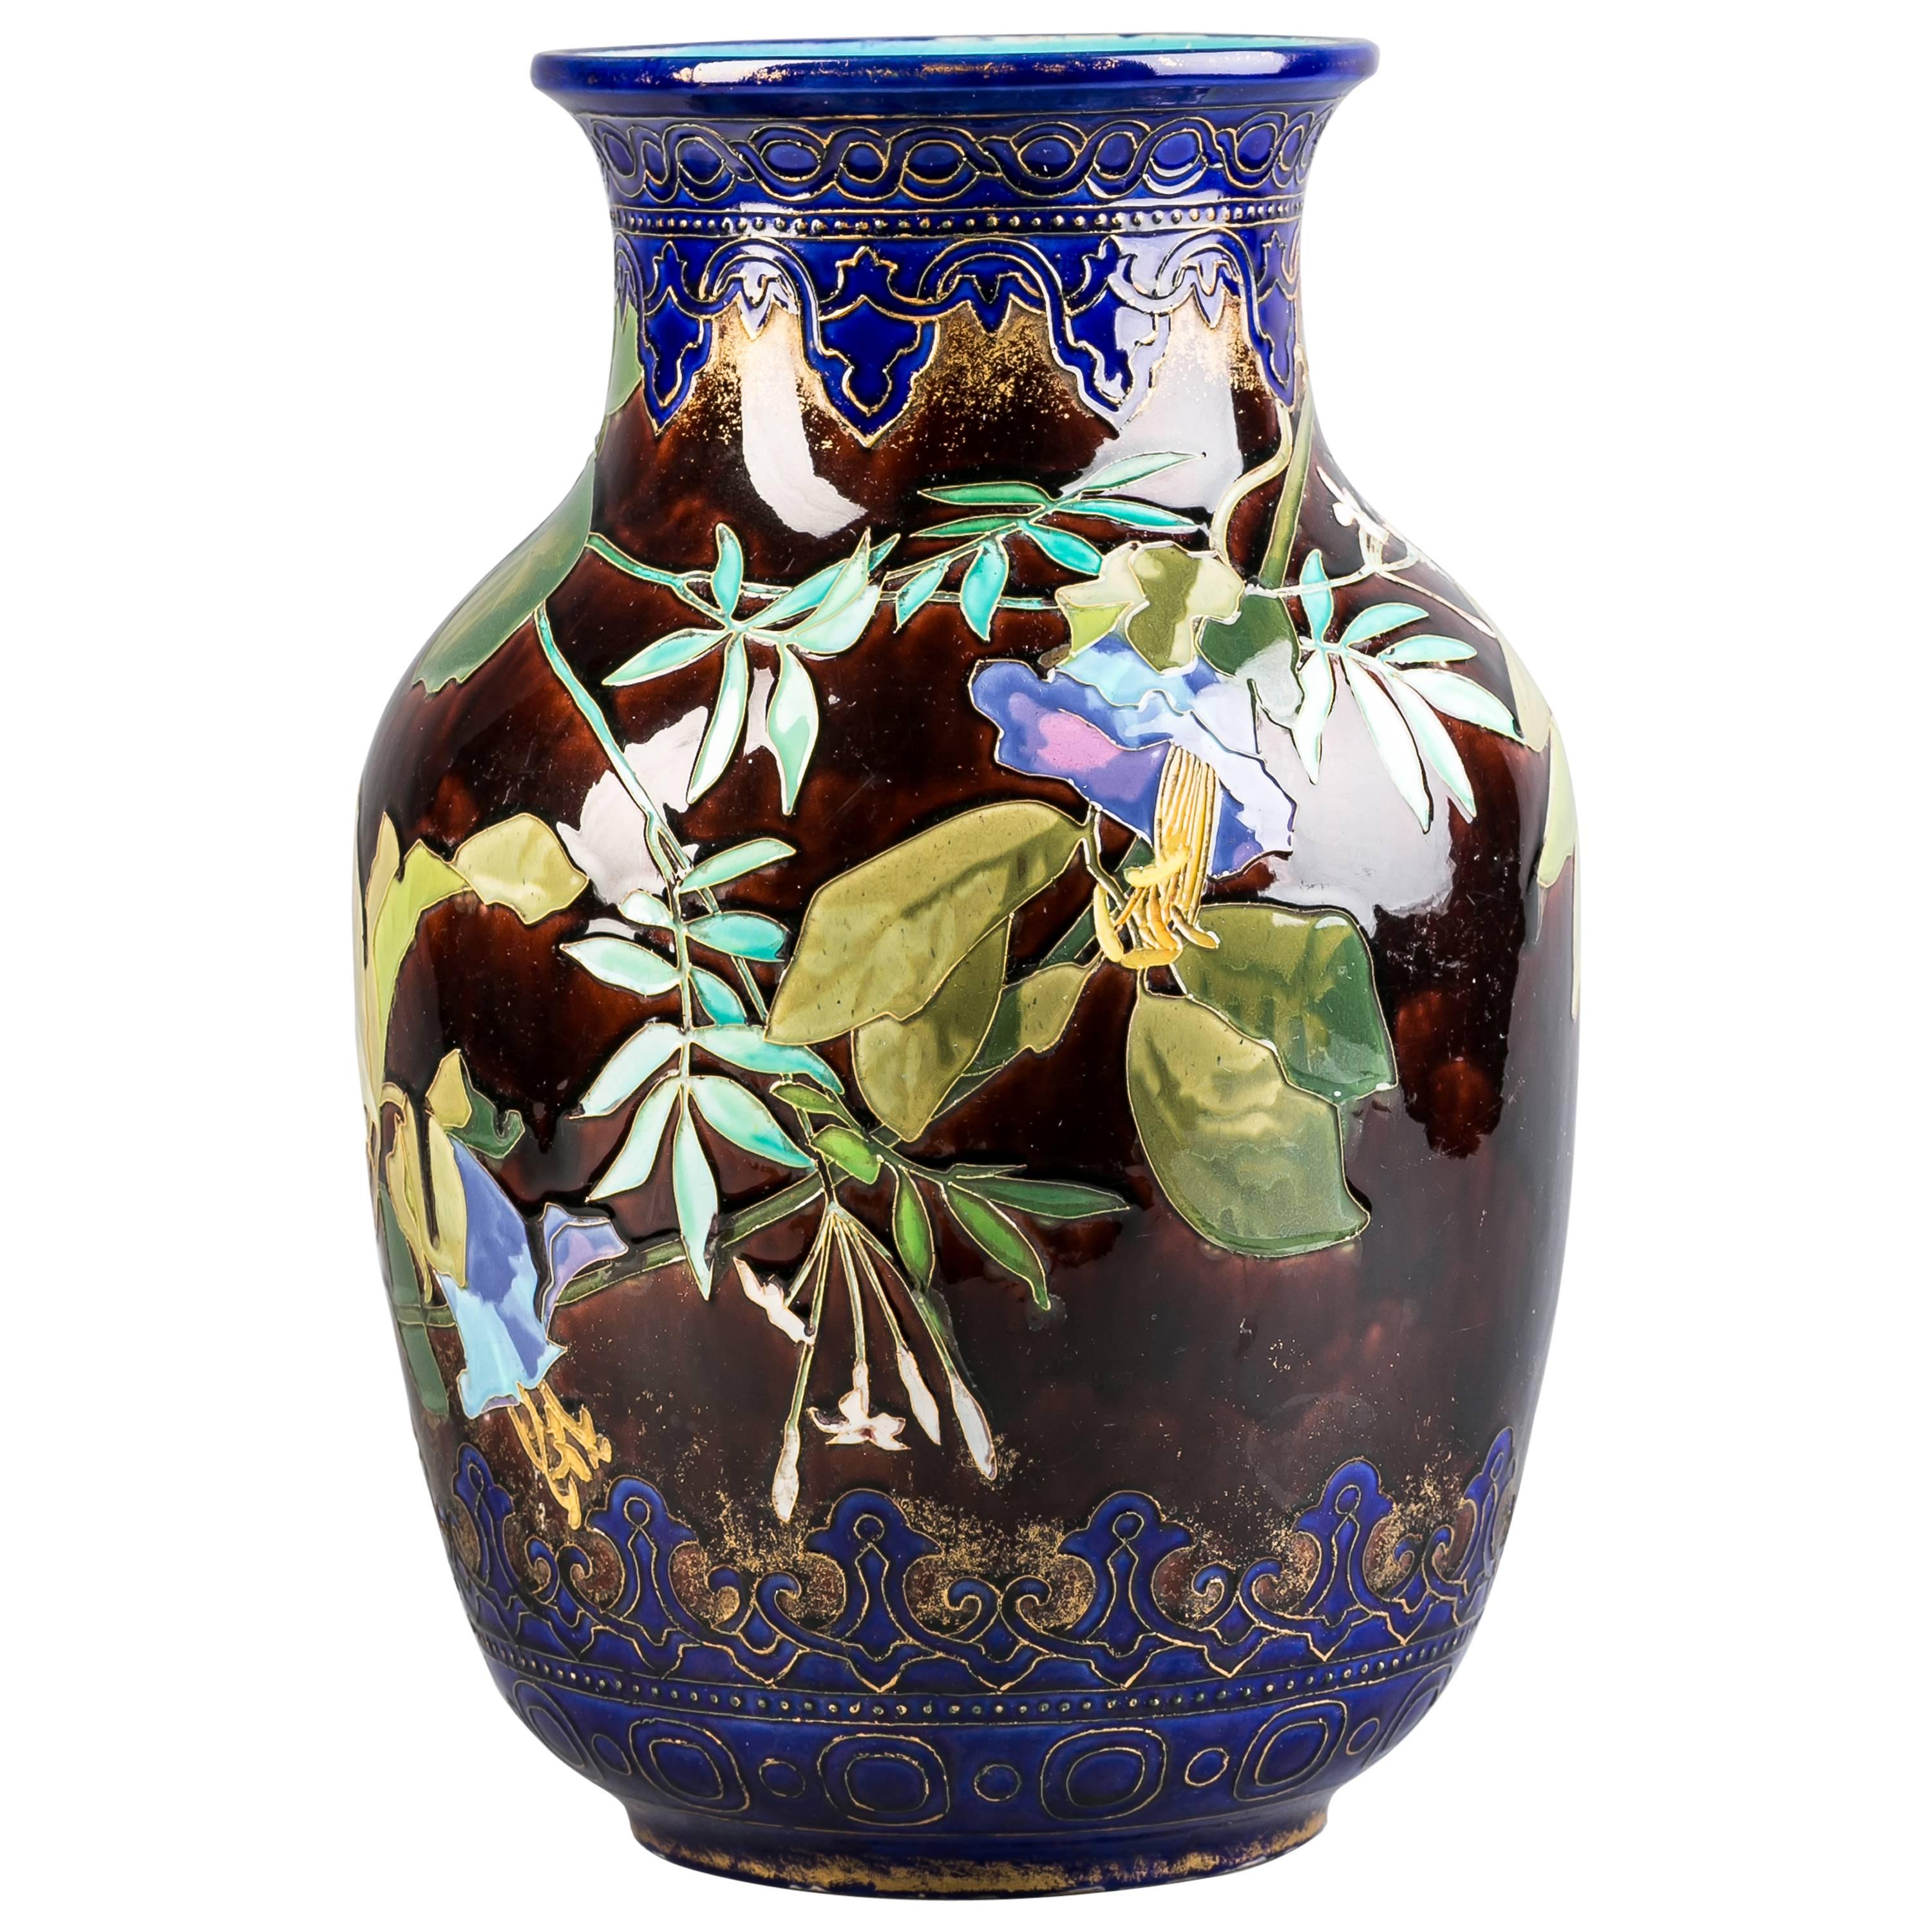 French Faience Art Nouveau Pottery Vase, circa 1900